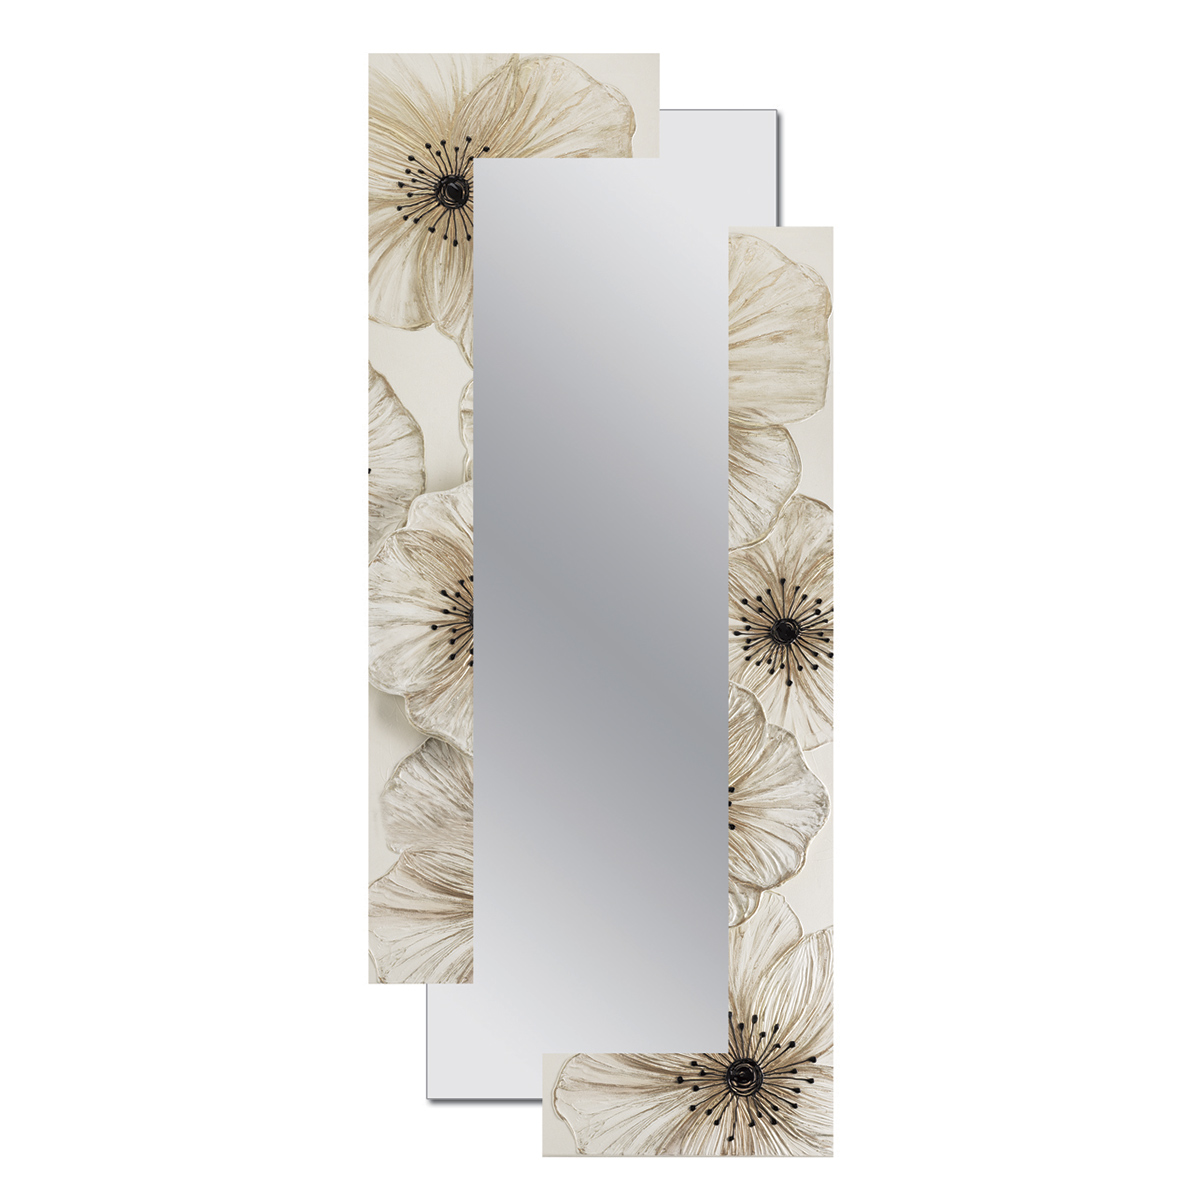 Specchio petunia grande bianco panna